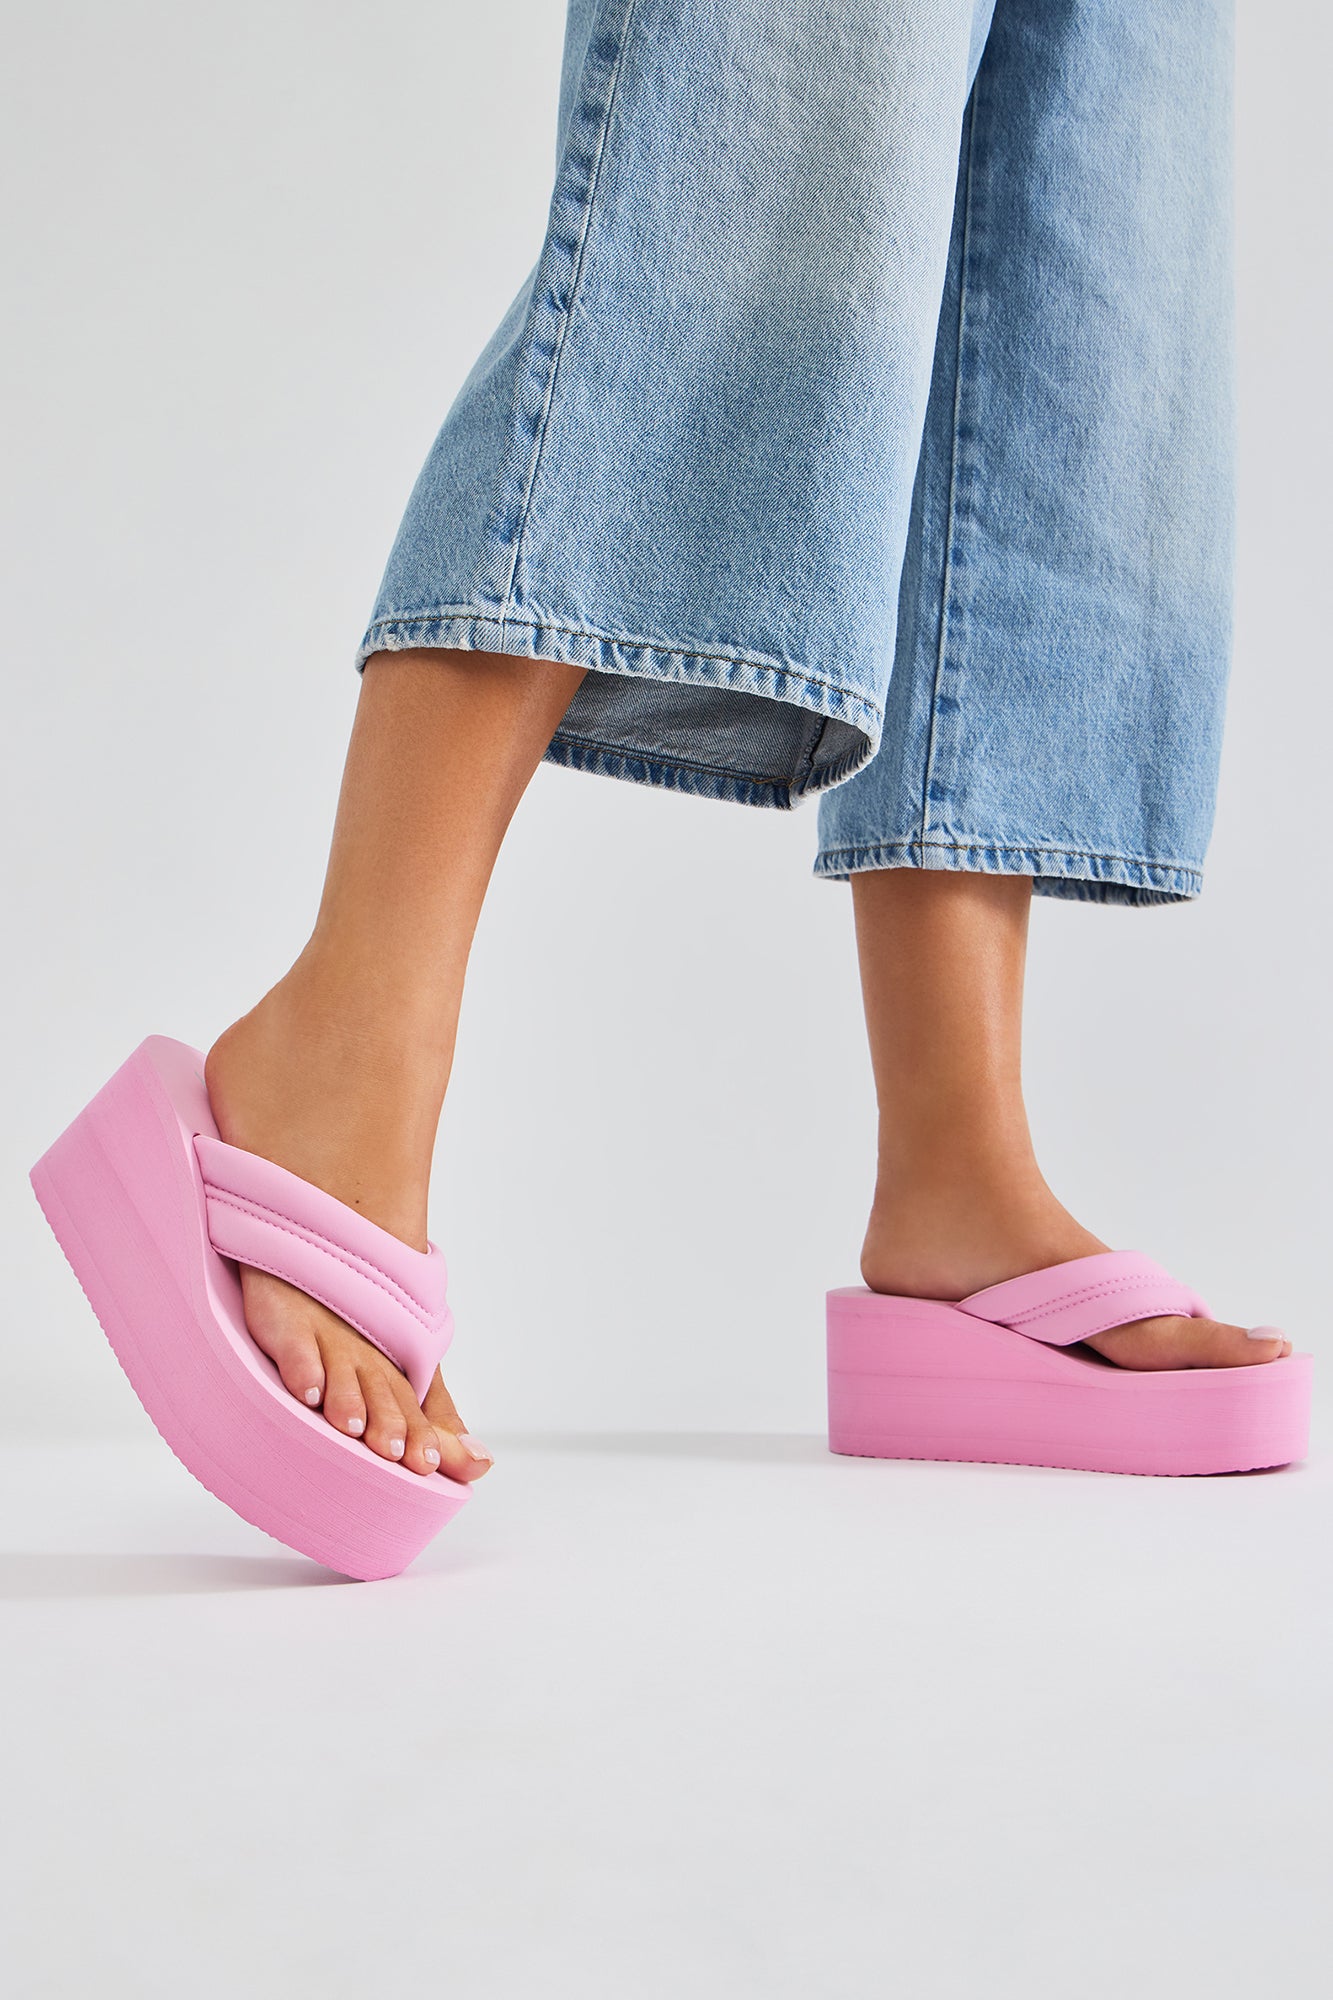 Women's Popular Girl Strappy Platform Wedges Sandals in Hot Pink Size 9 by Fashion Nova | Fashion Nova